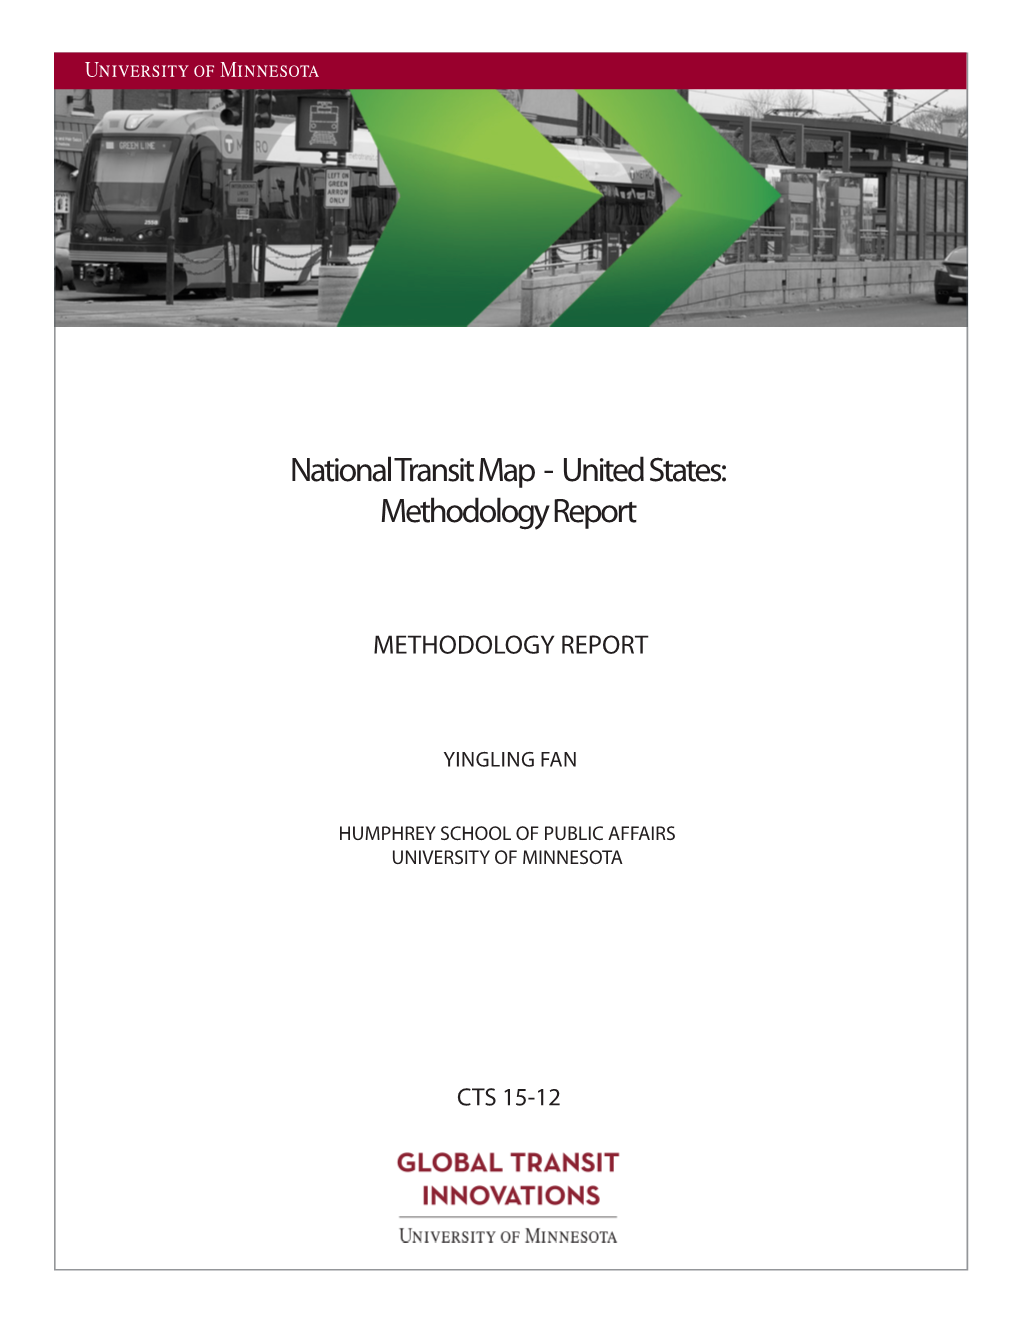 National Transit Map - United States: Methodology Report